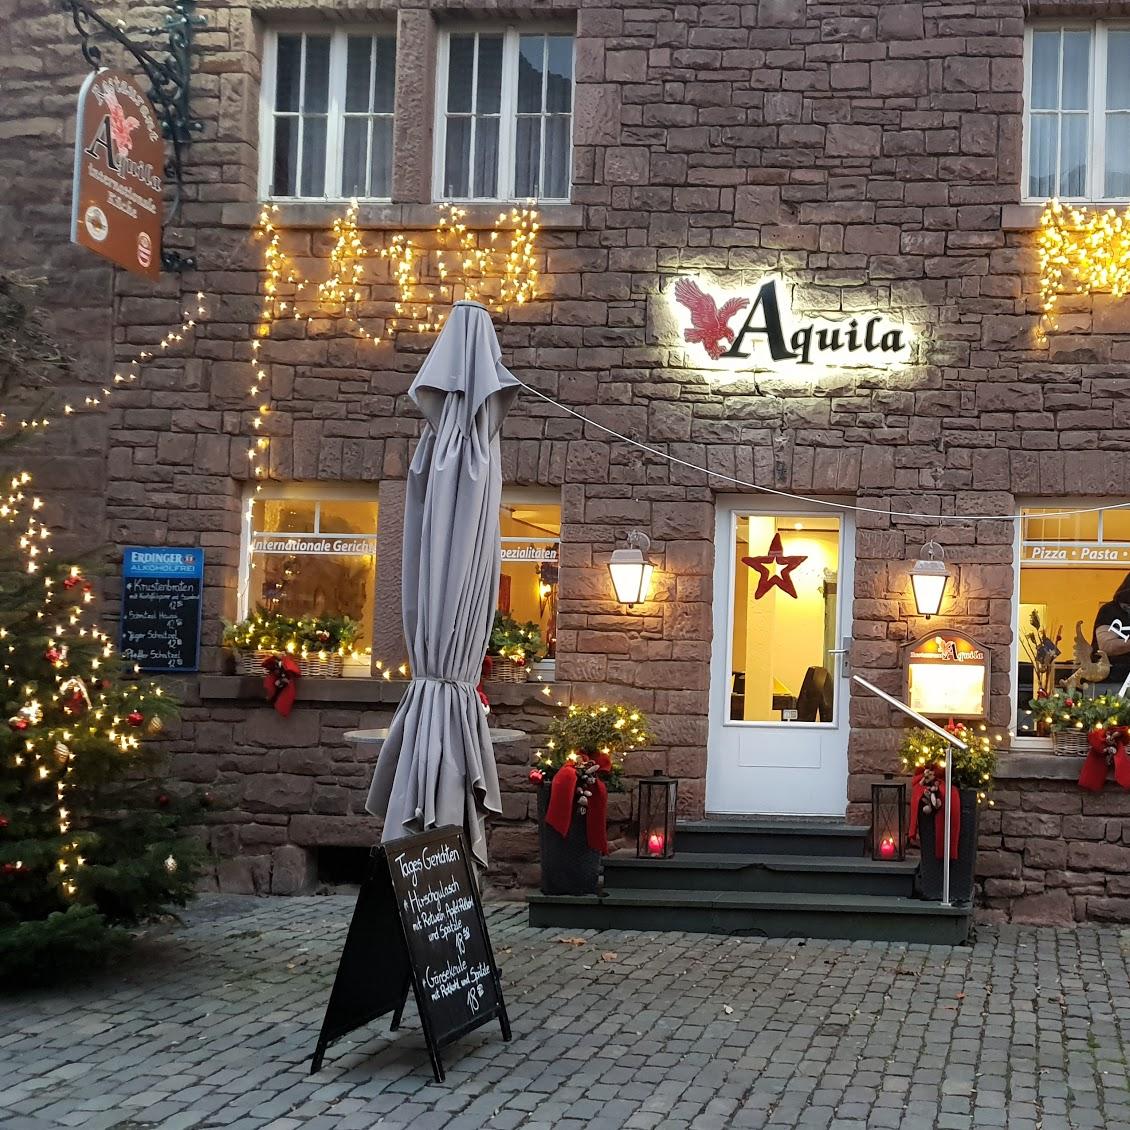 Restaurant "Restaurant Aquila" in Nideggen